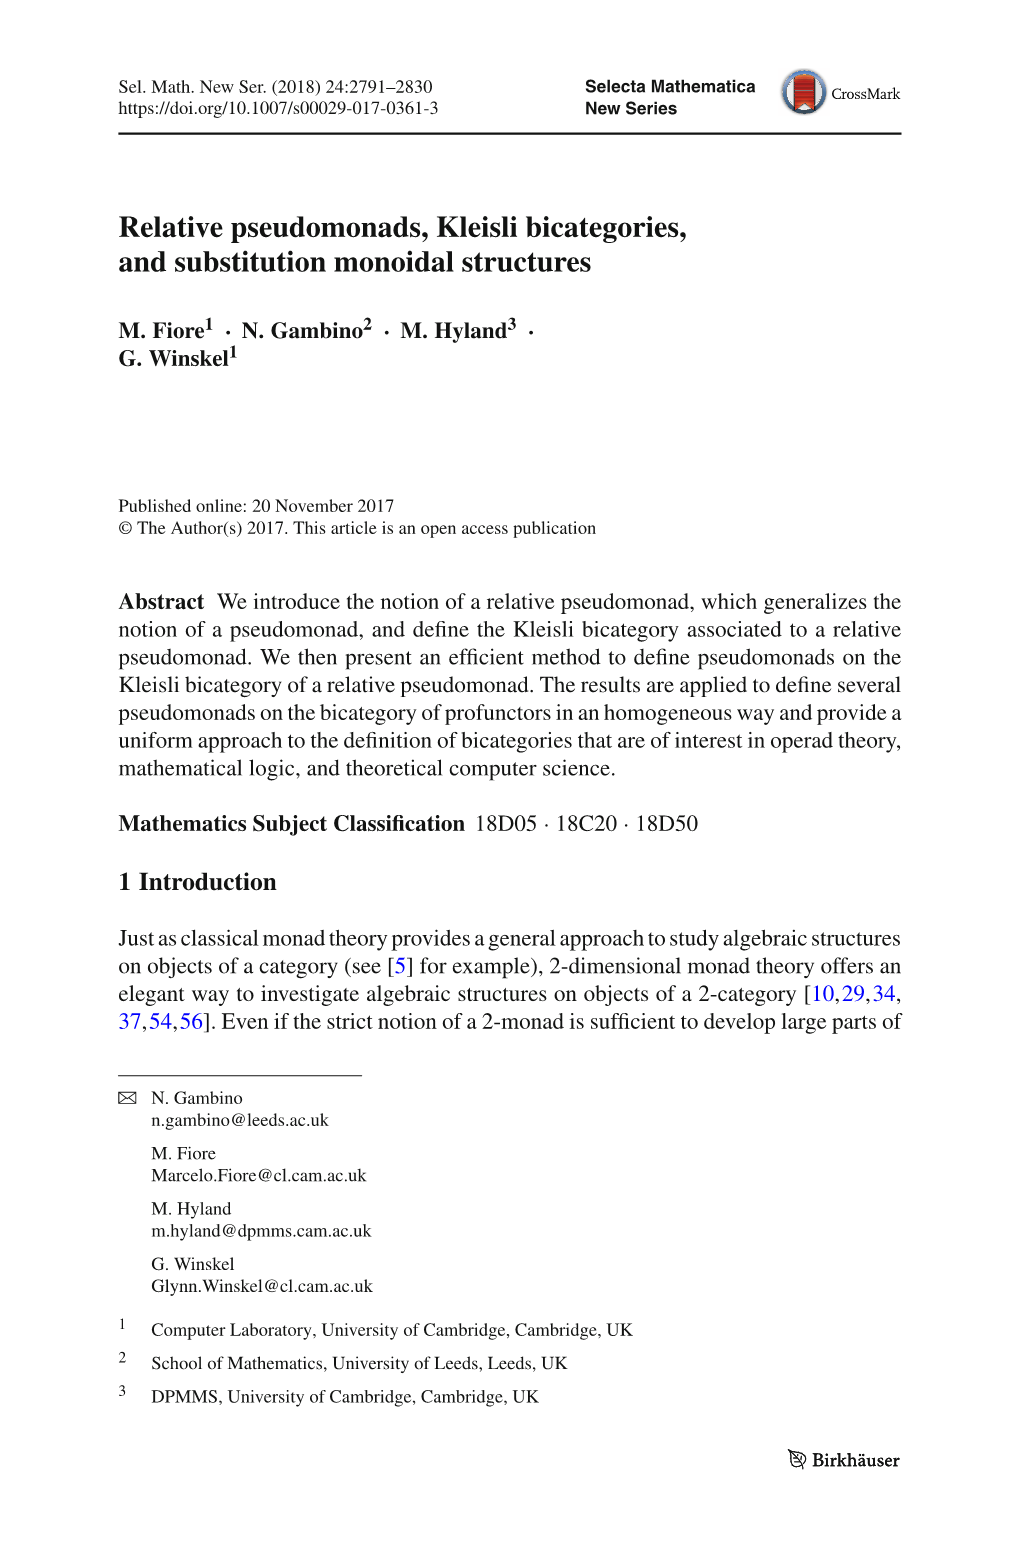 Relative Pseudomonads, Kleisli Bicategories, and Substitution Monoidal Structures